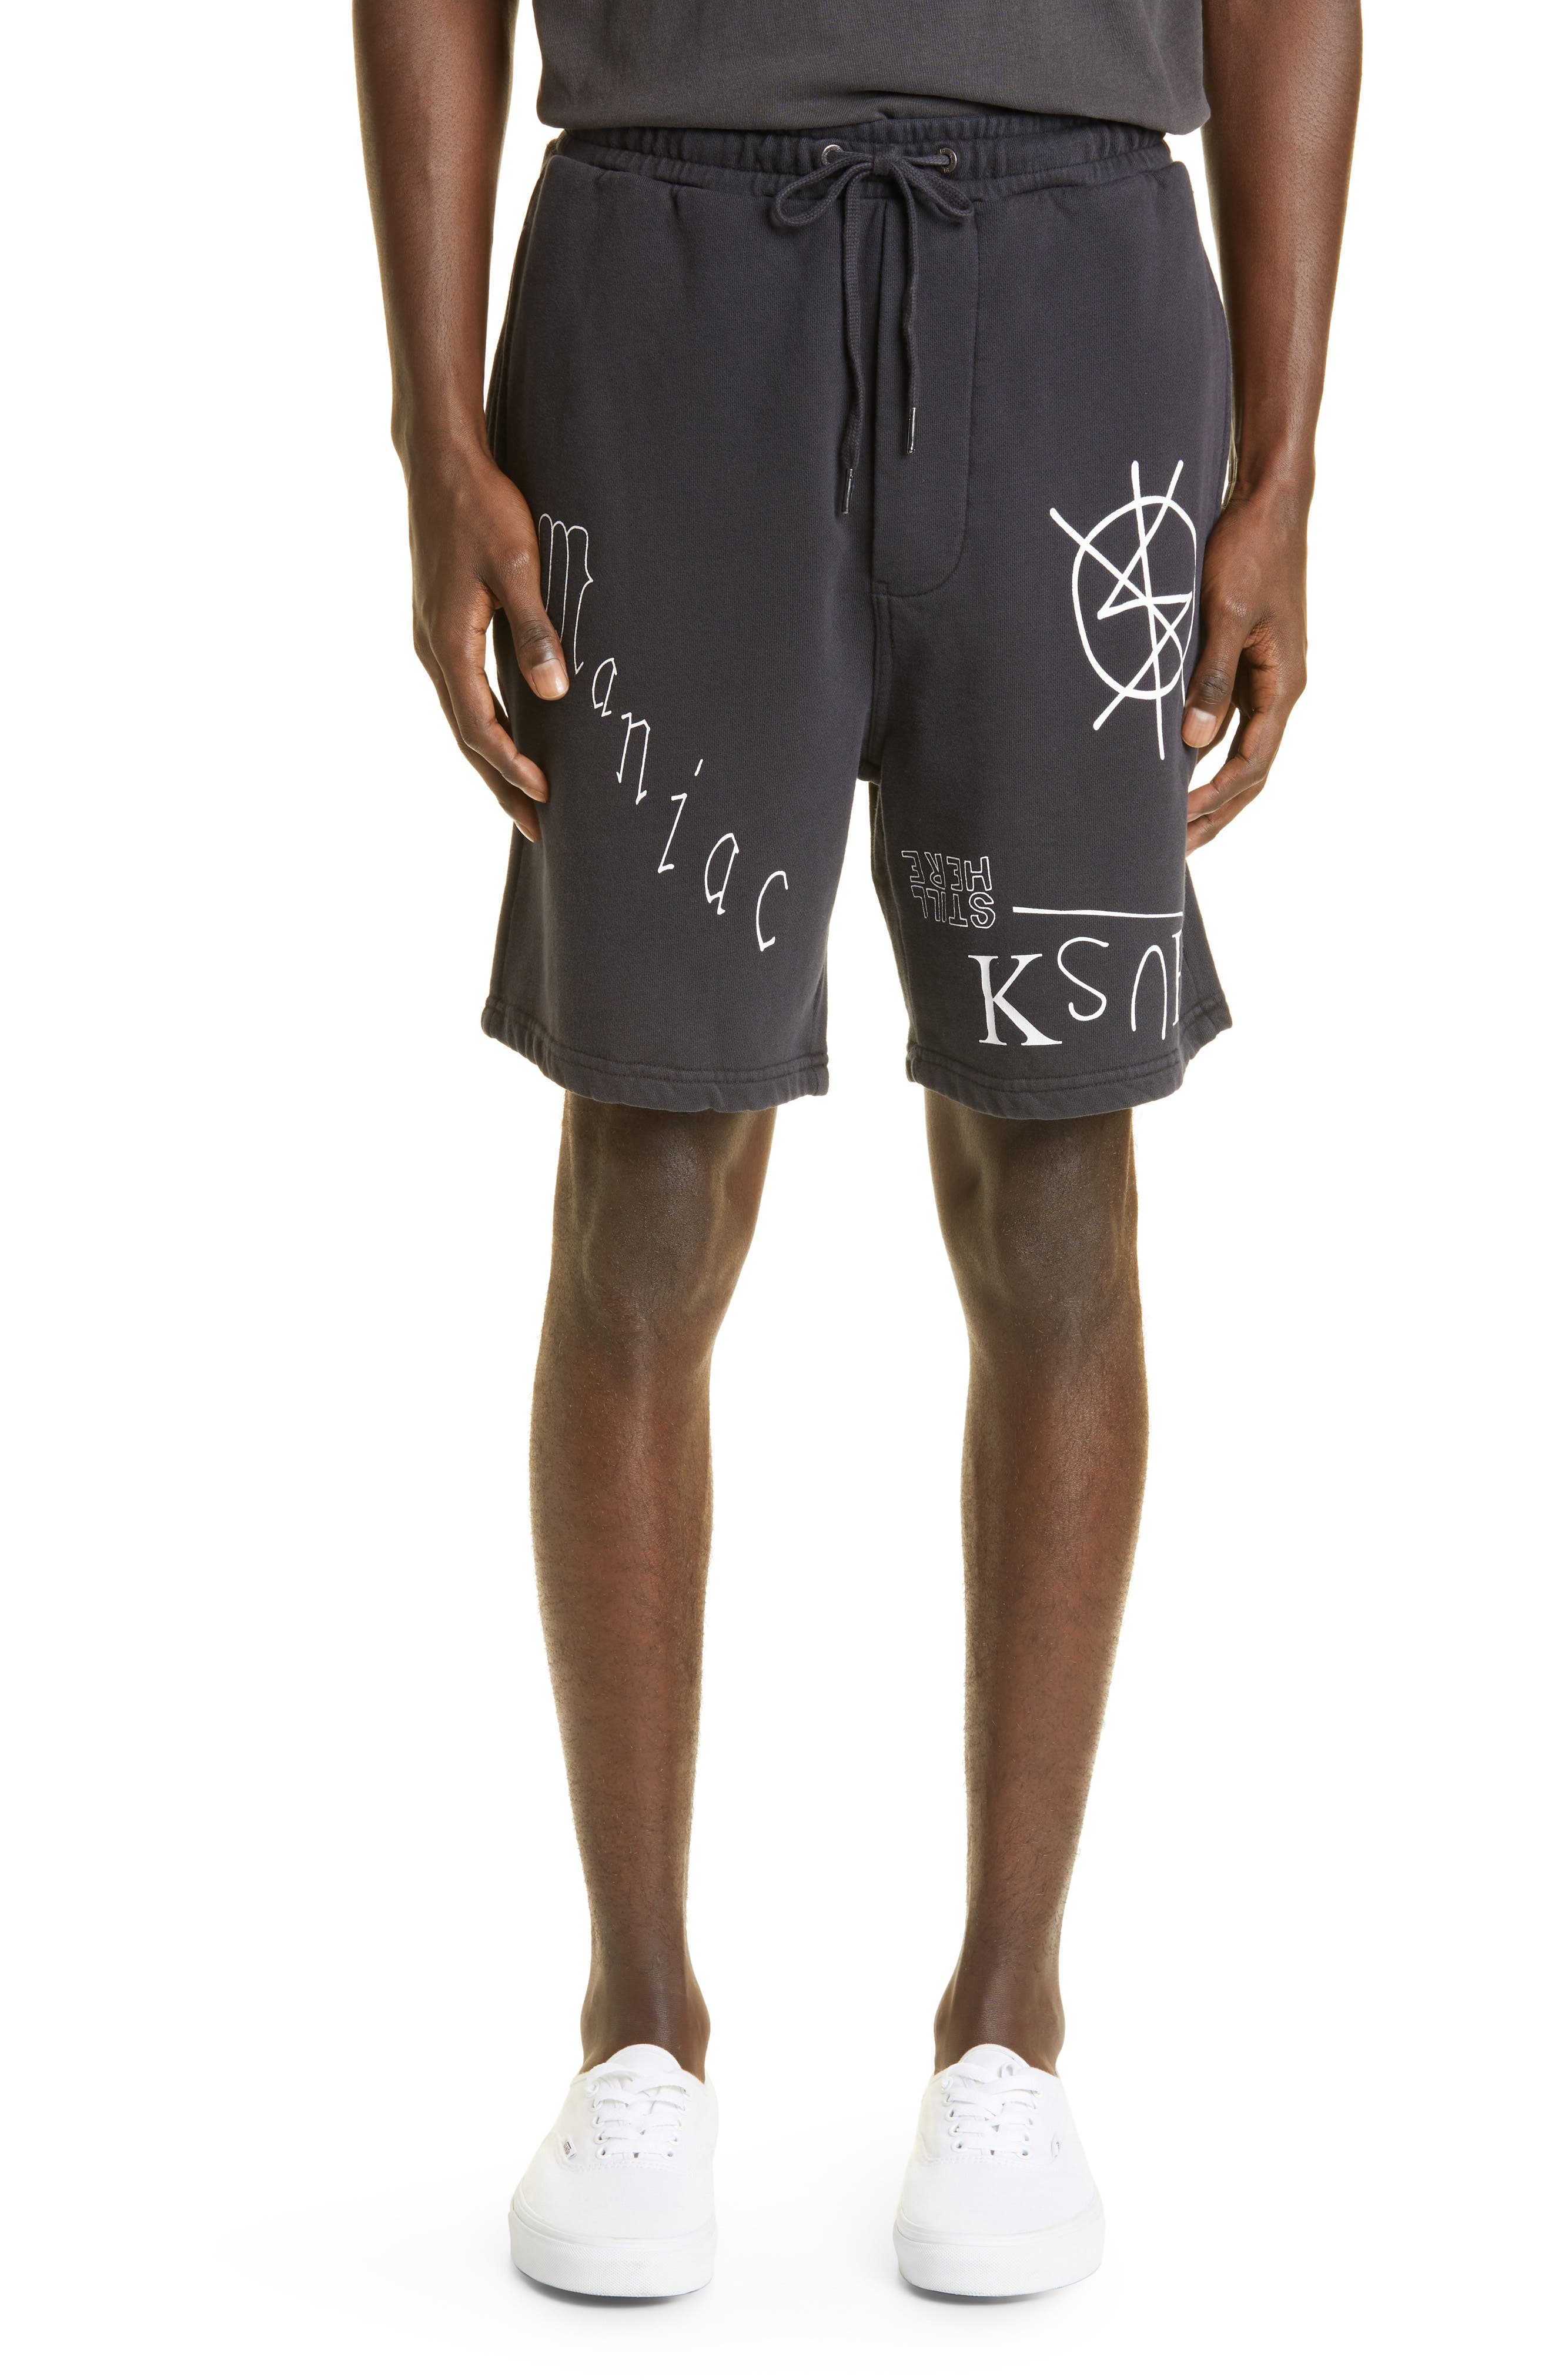 Ksubi Men's Laste Maniac Trak Cotton Shorts in Black at Nordstrom, Size Small